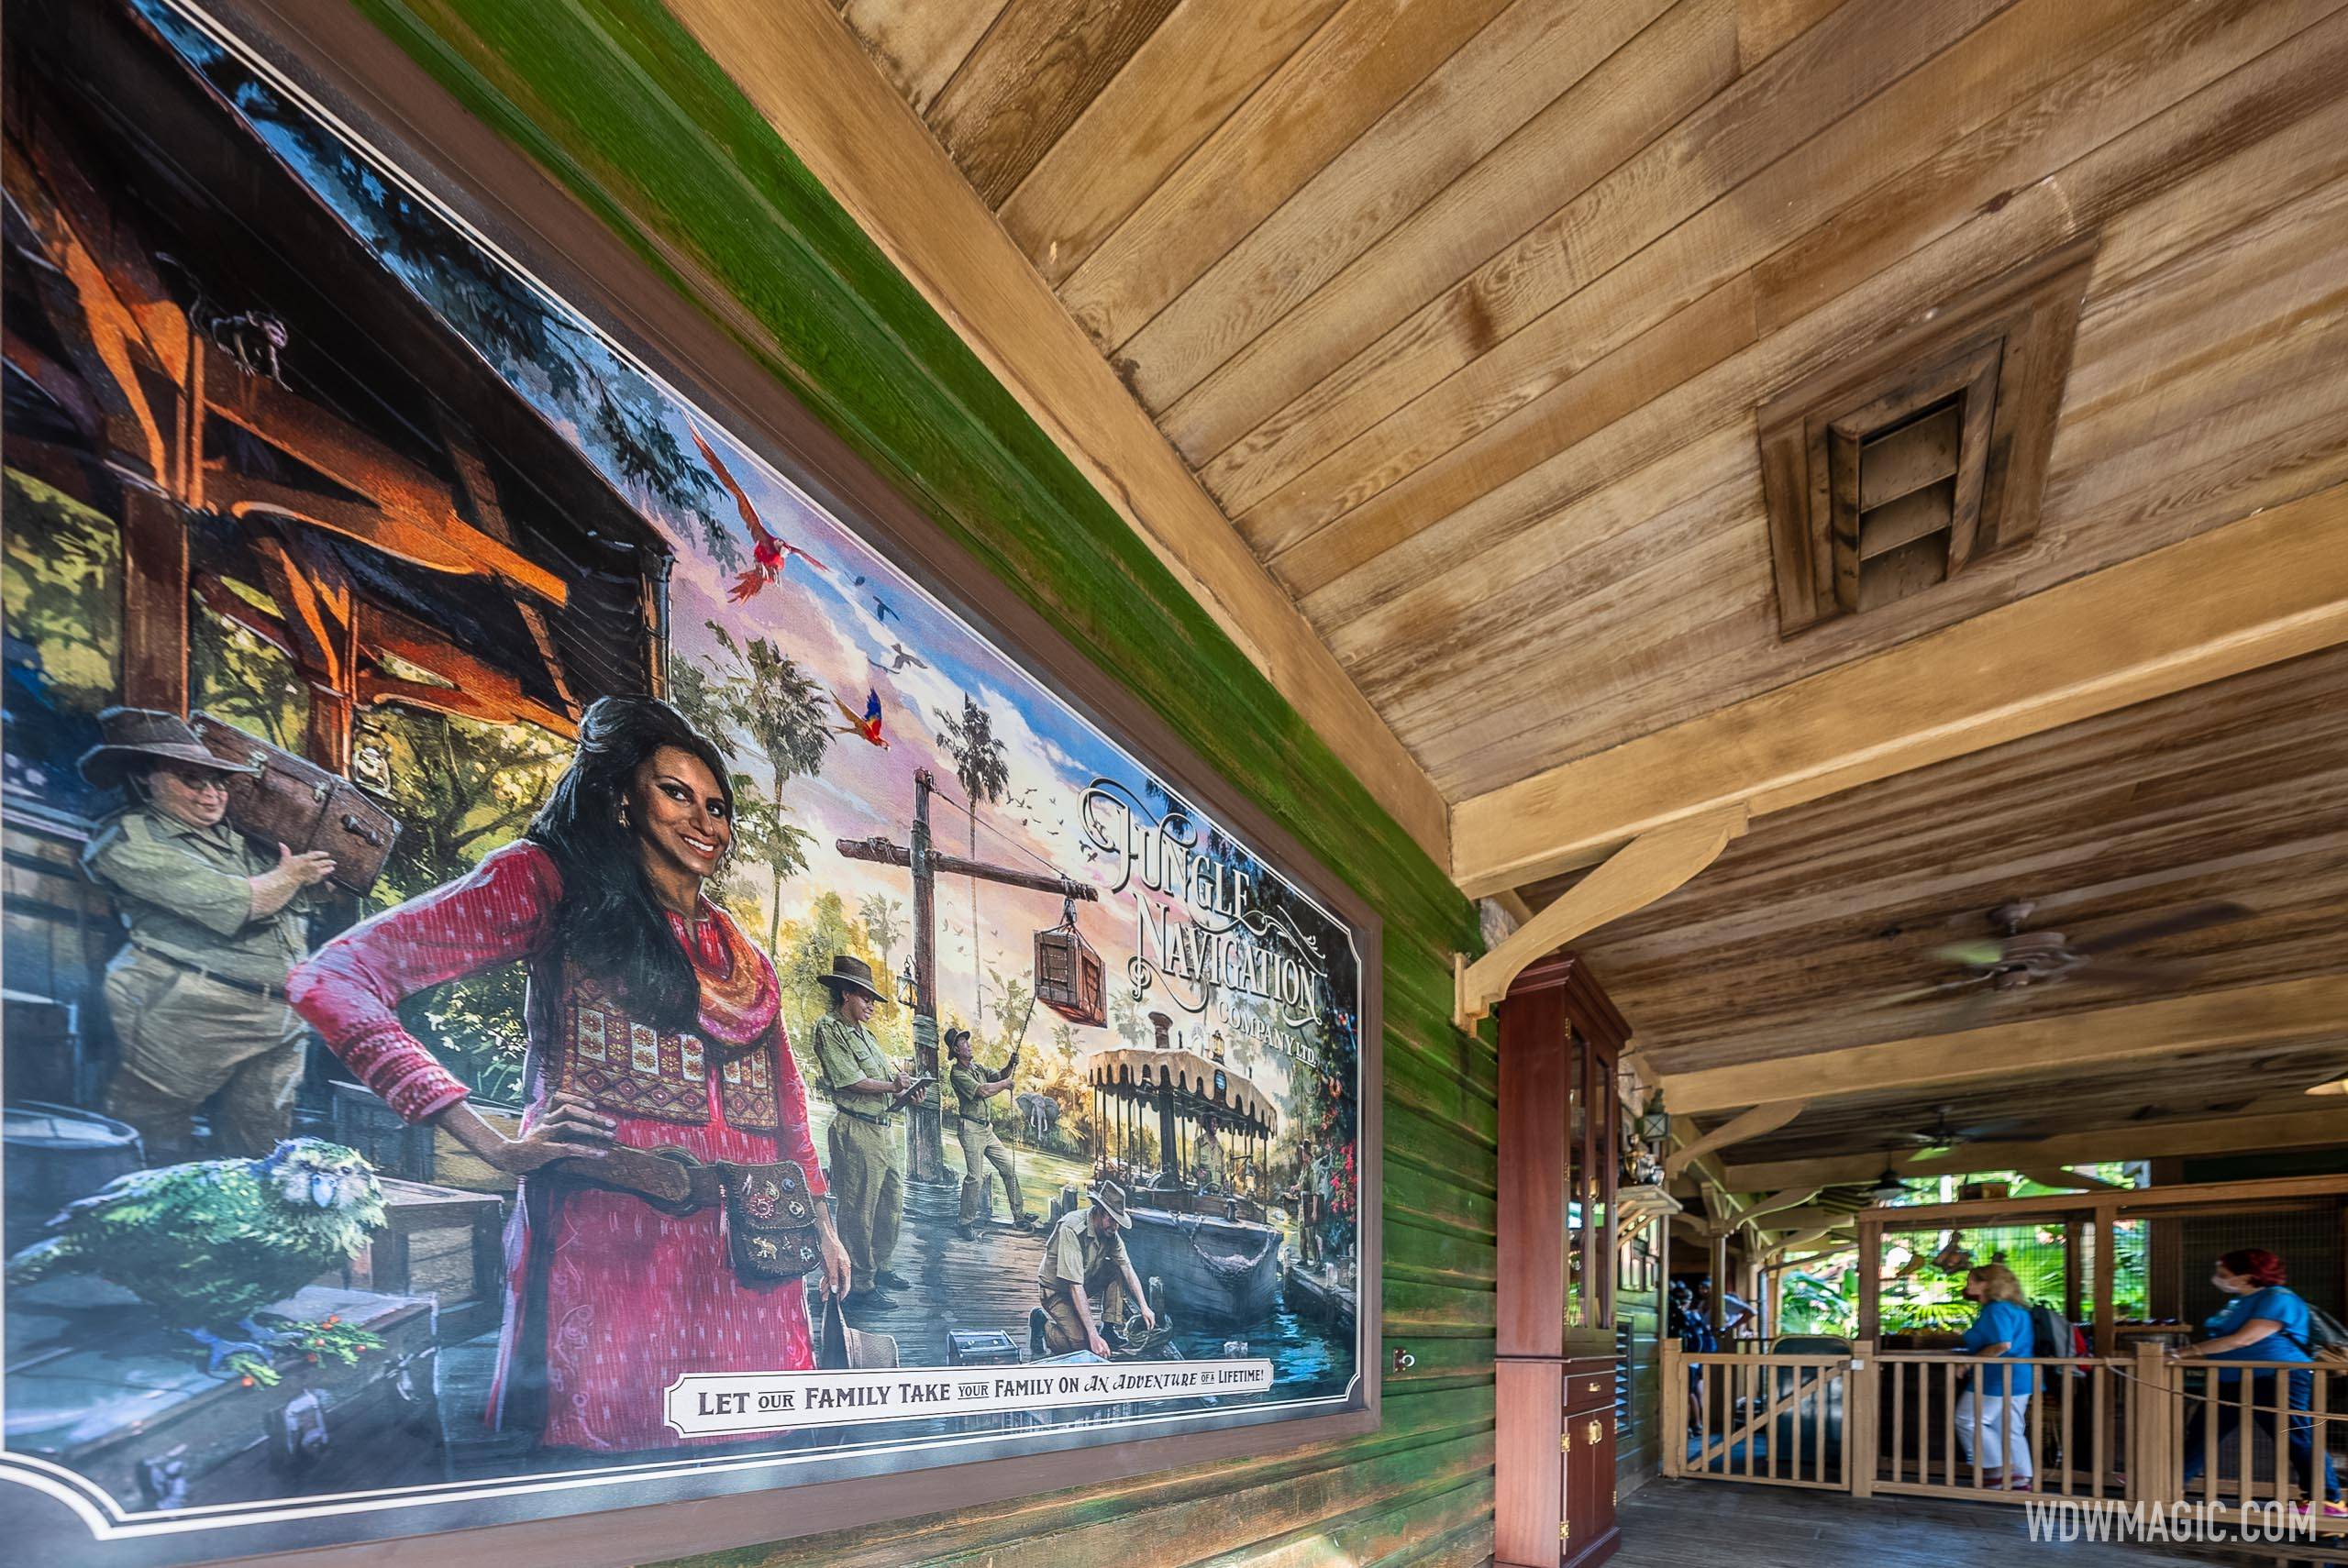 Jungle Cruise entrance area details, murals and portraits